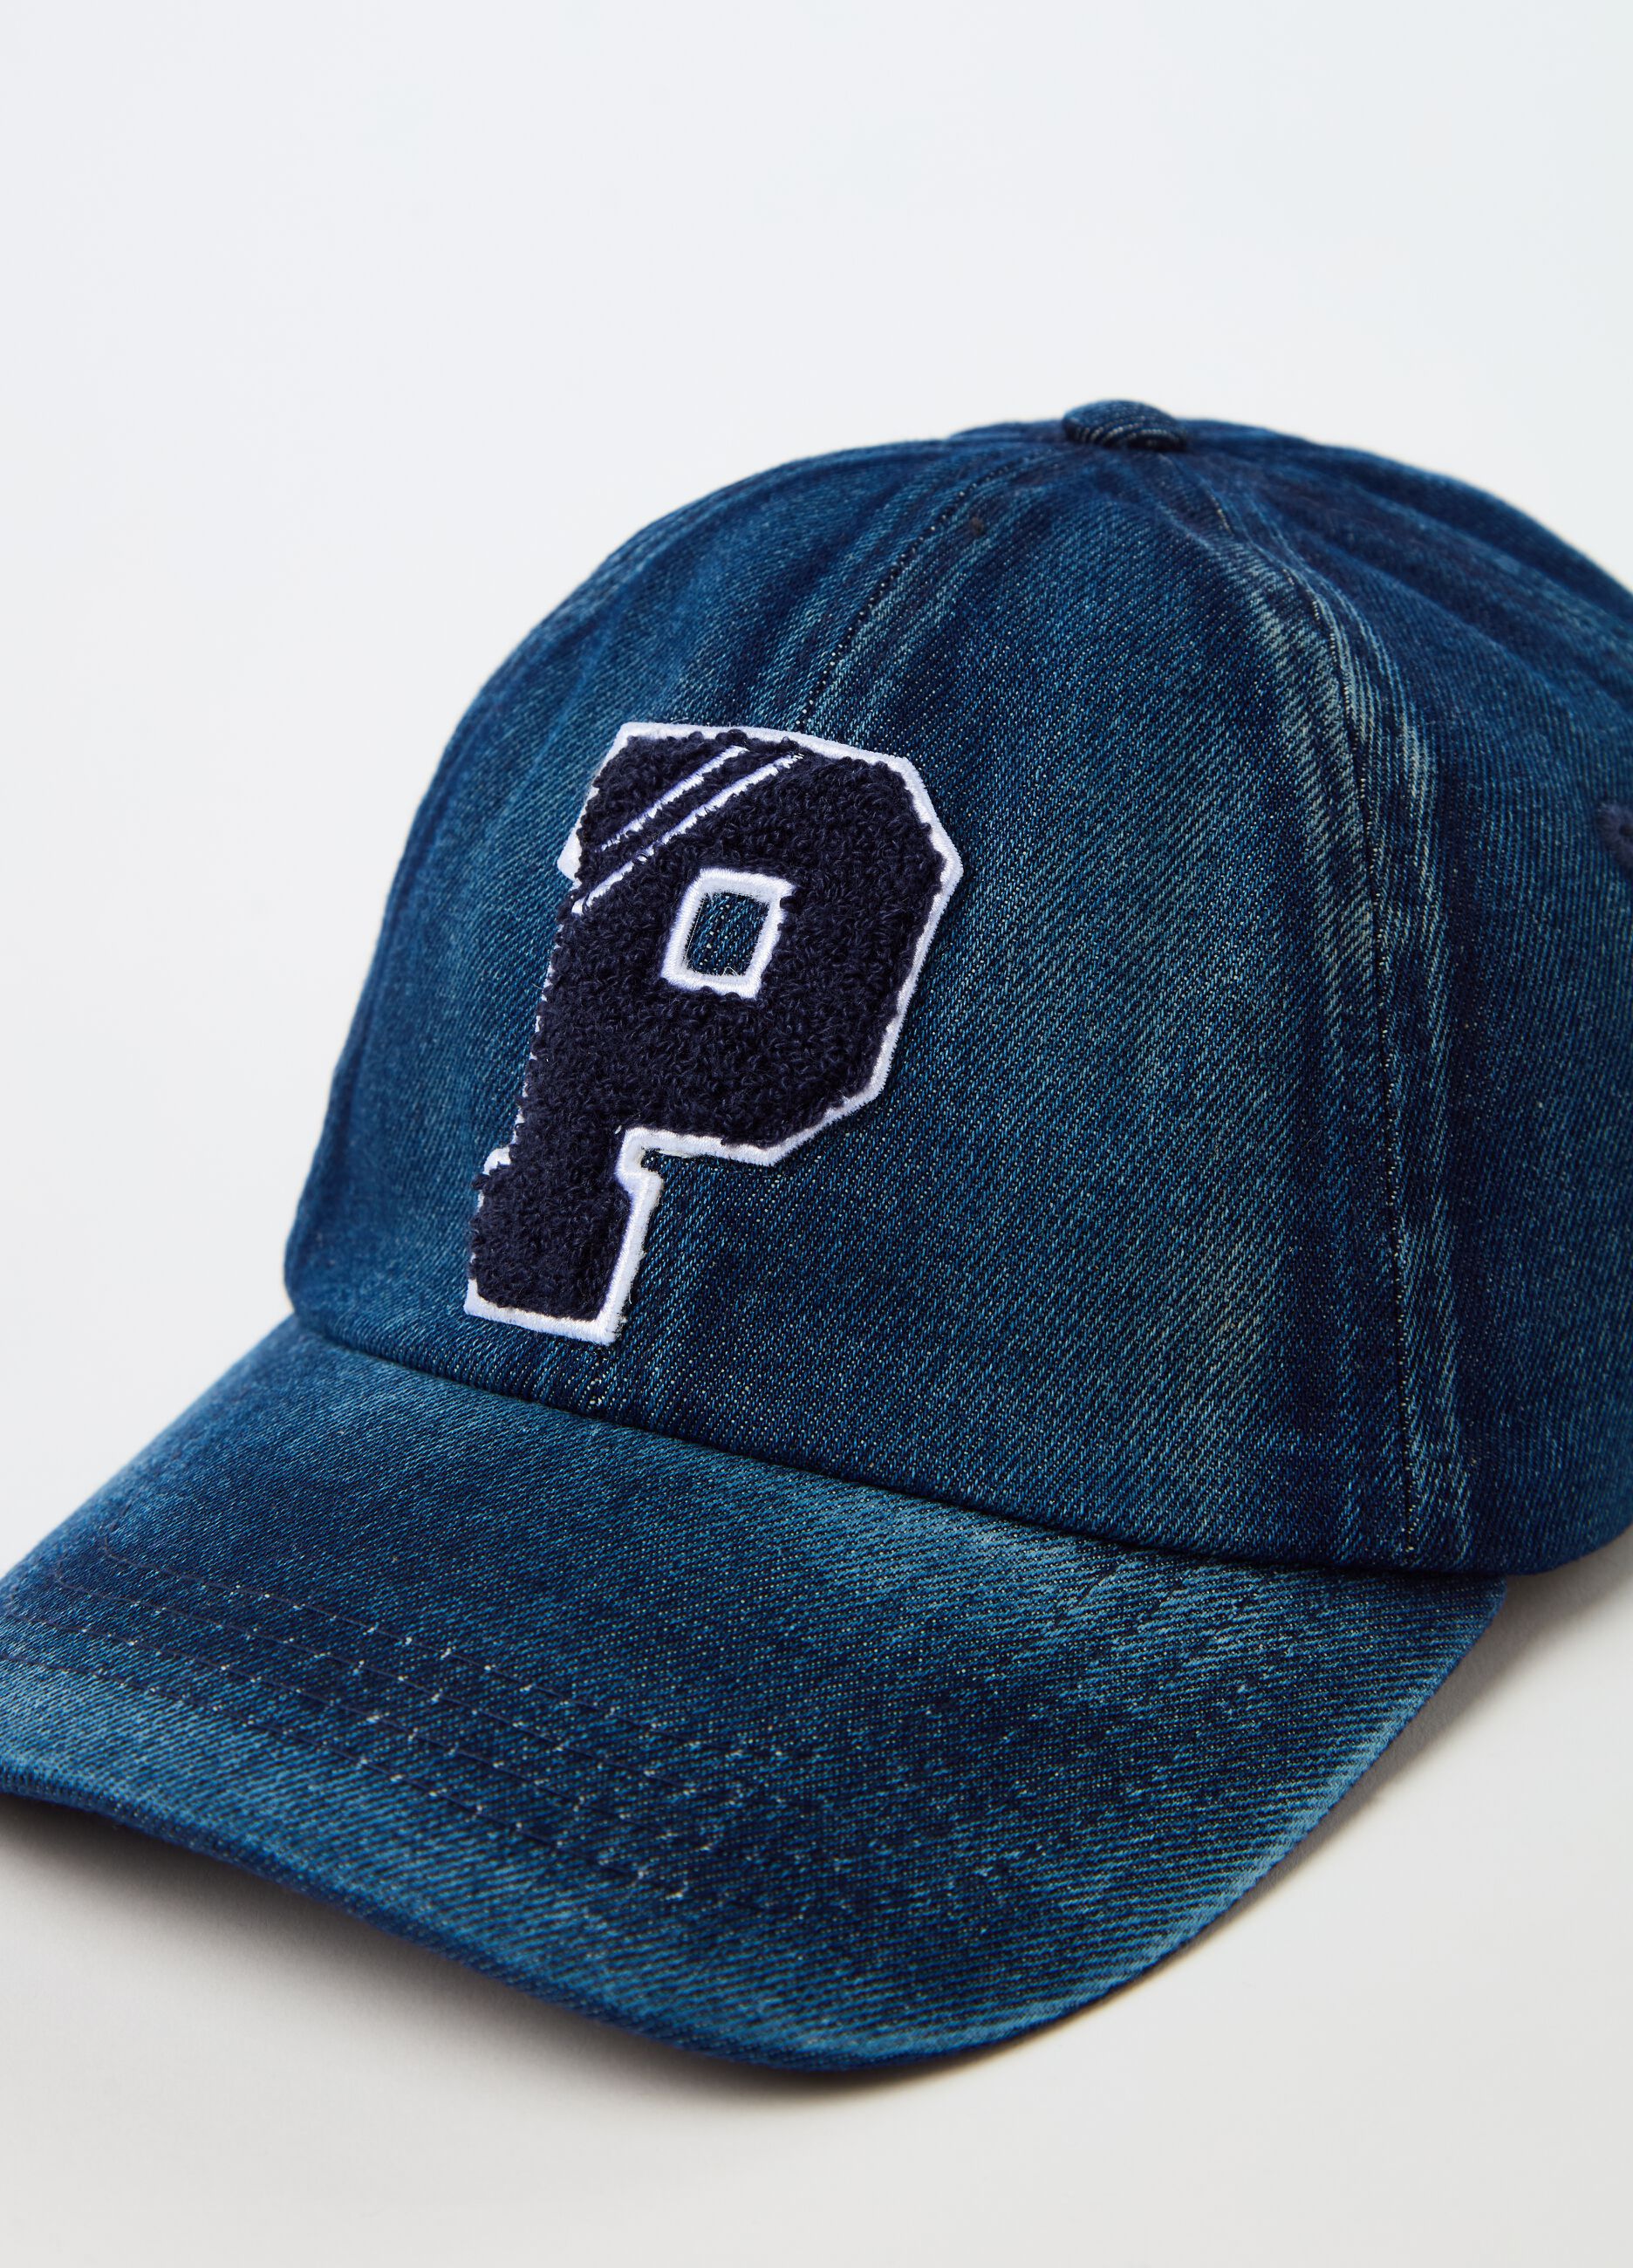 Denim baseball cap with logo